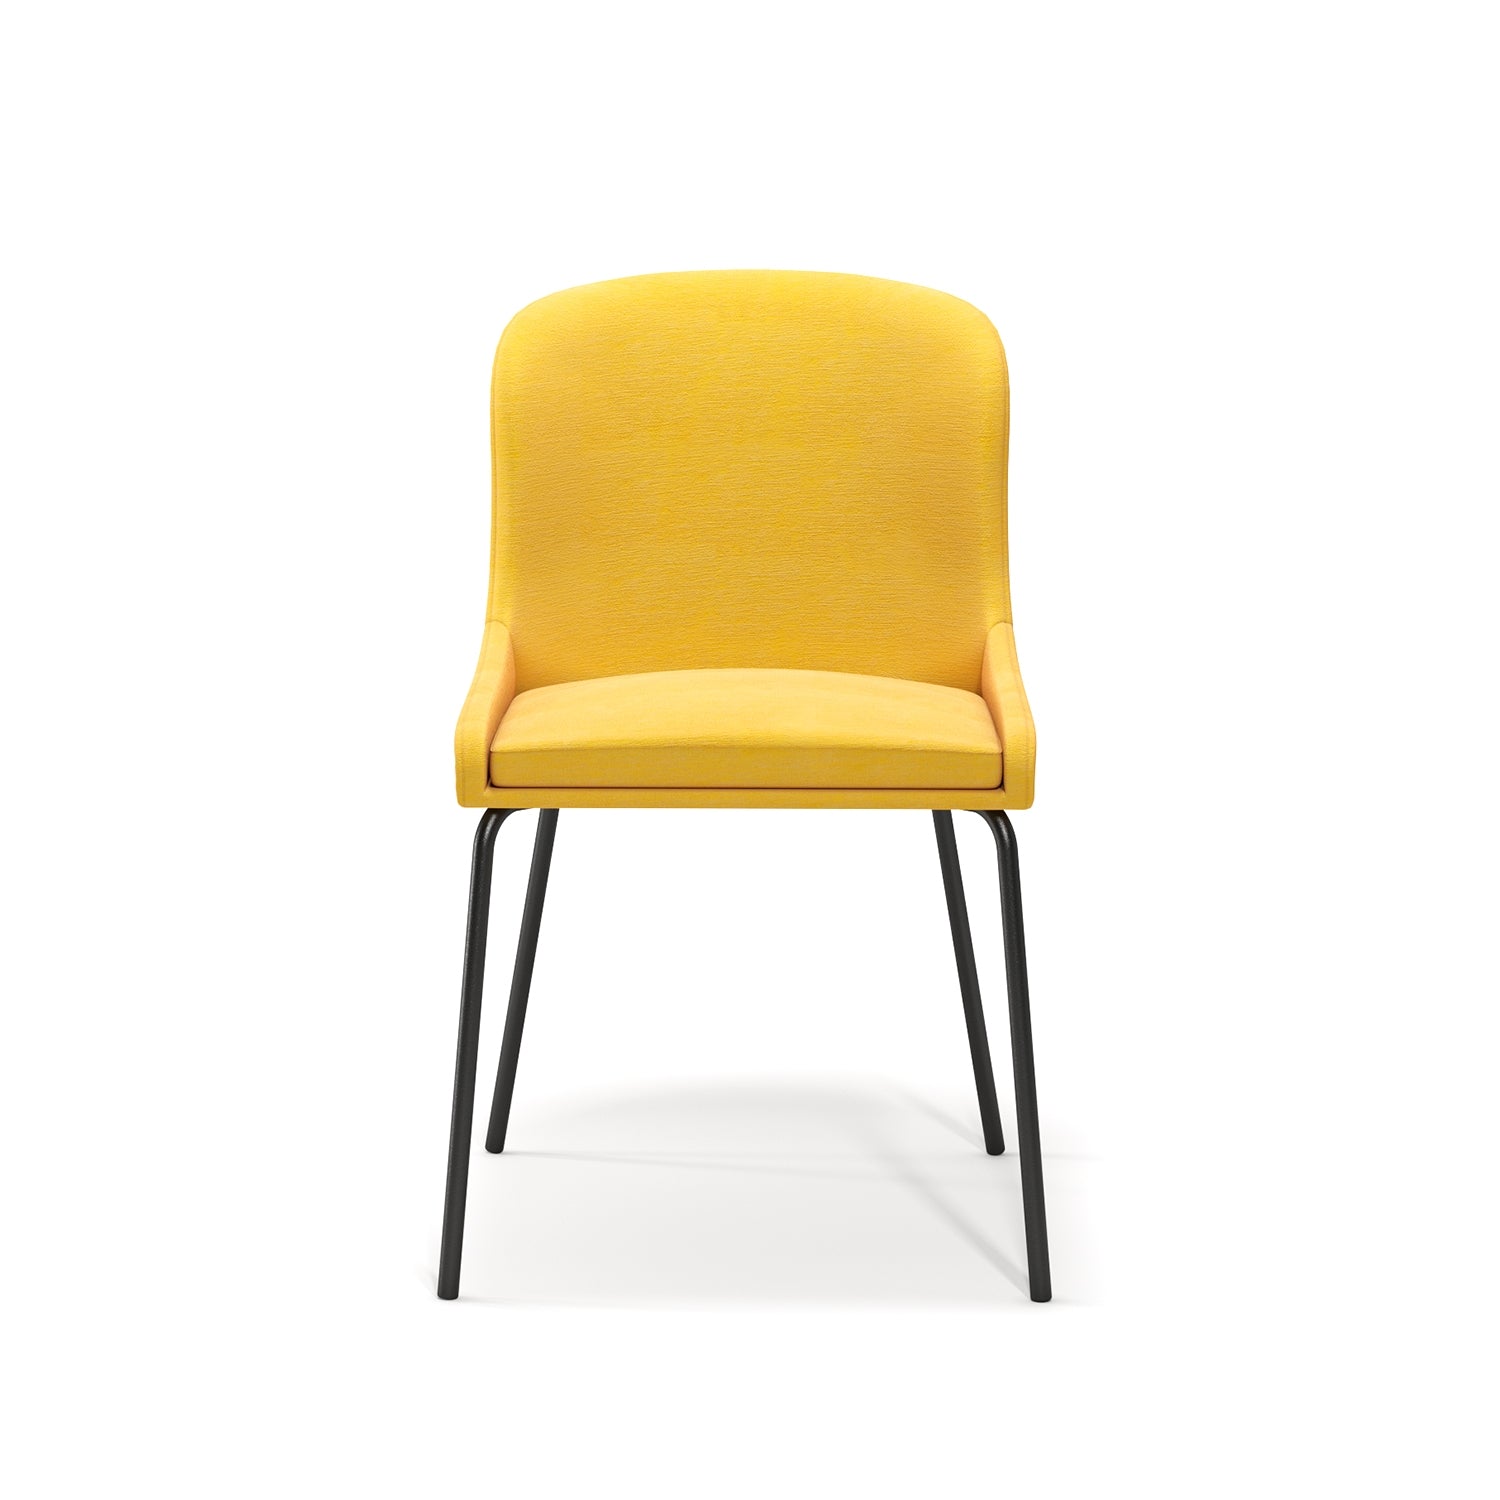 Designer Stuhl - Marco Metal L1 - verschiedene Farben